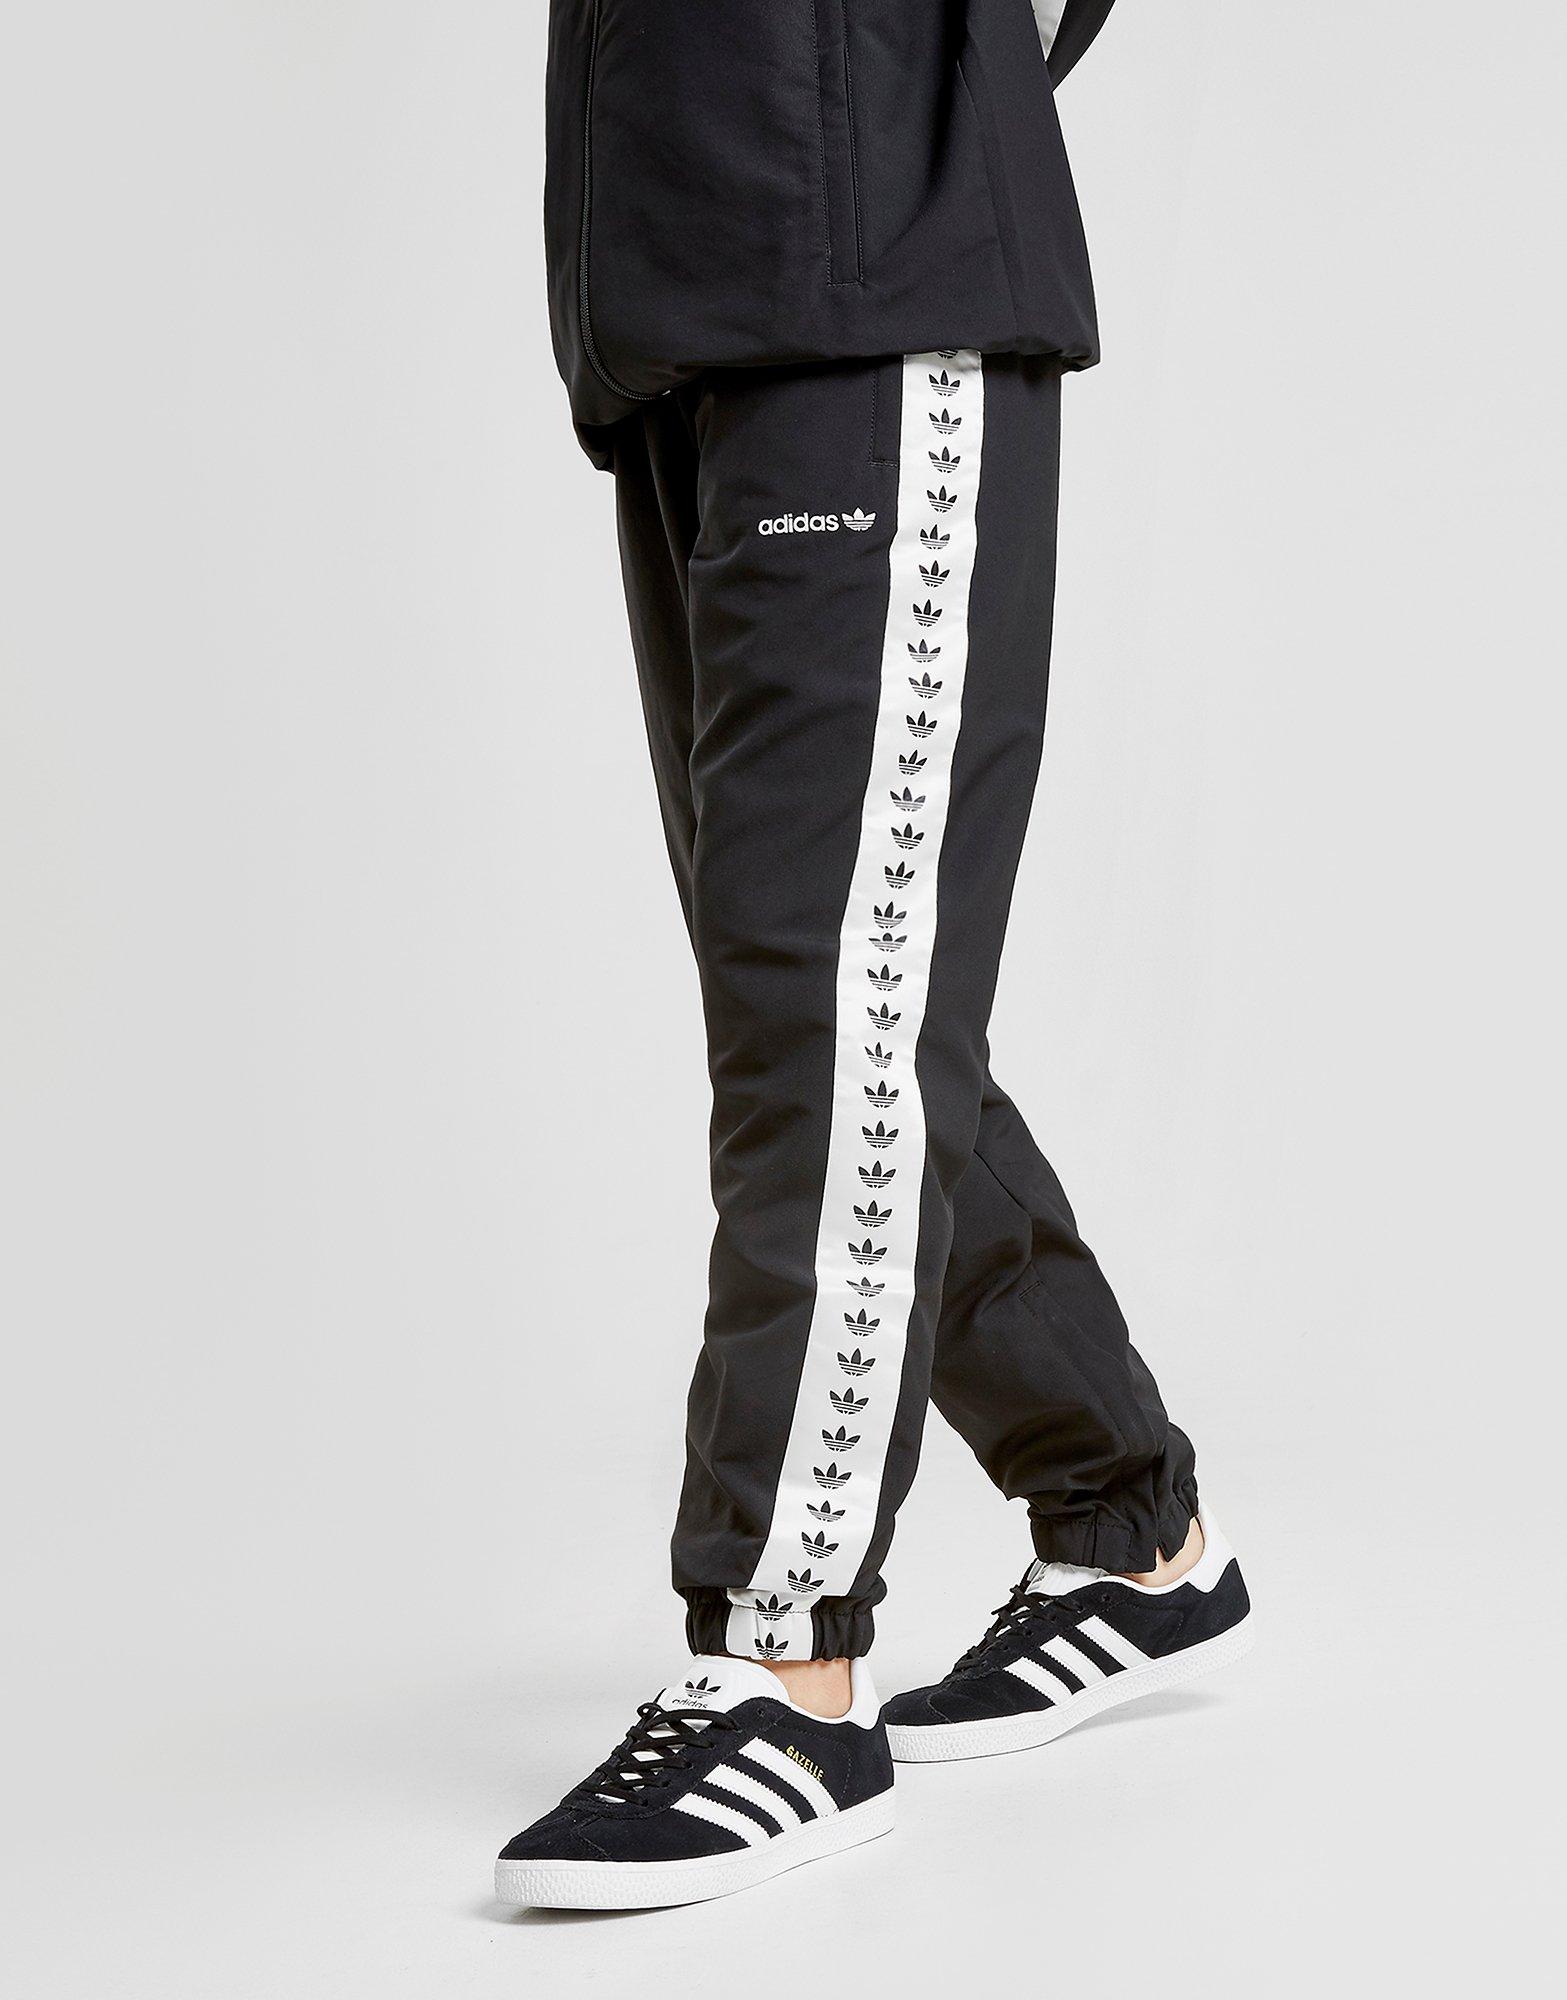 adidas taped track pants